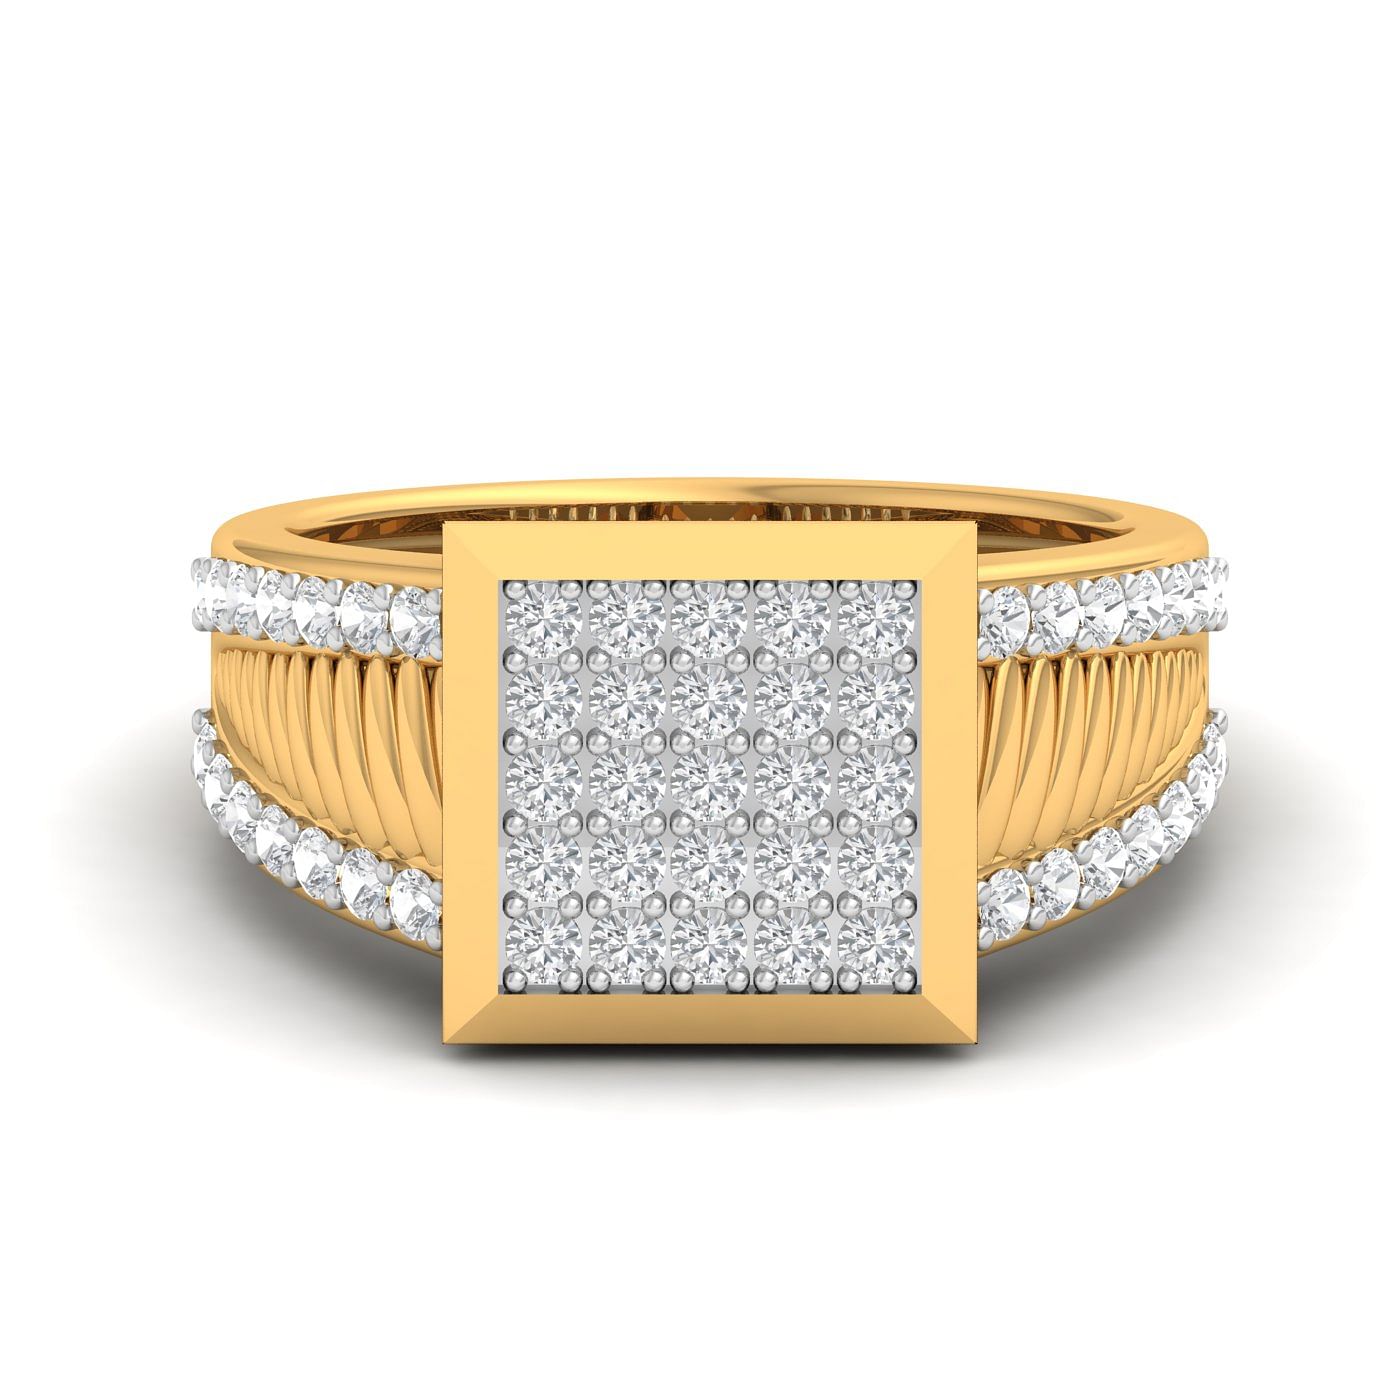 18k Yellow Gold Diamond Square Cluster Men's Ring For Wedding